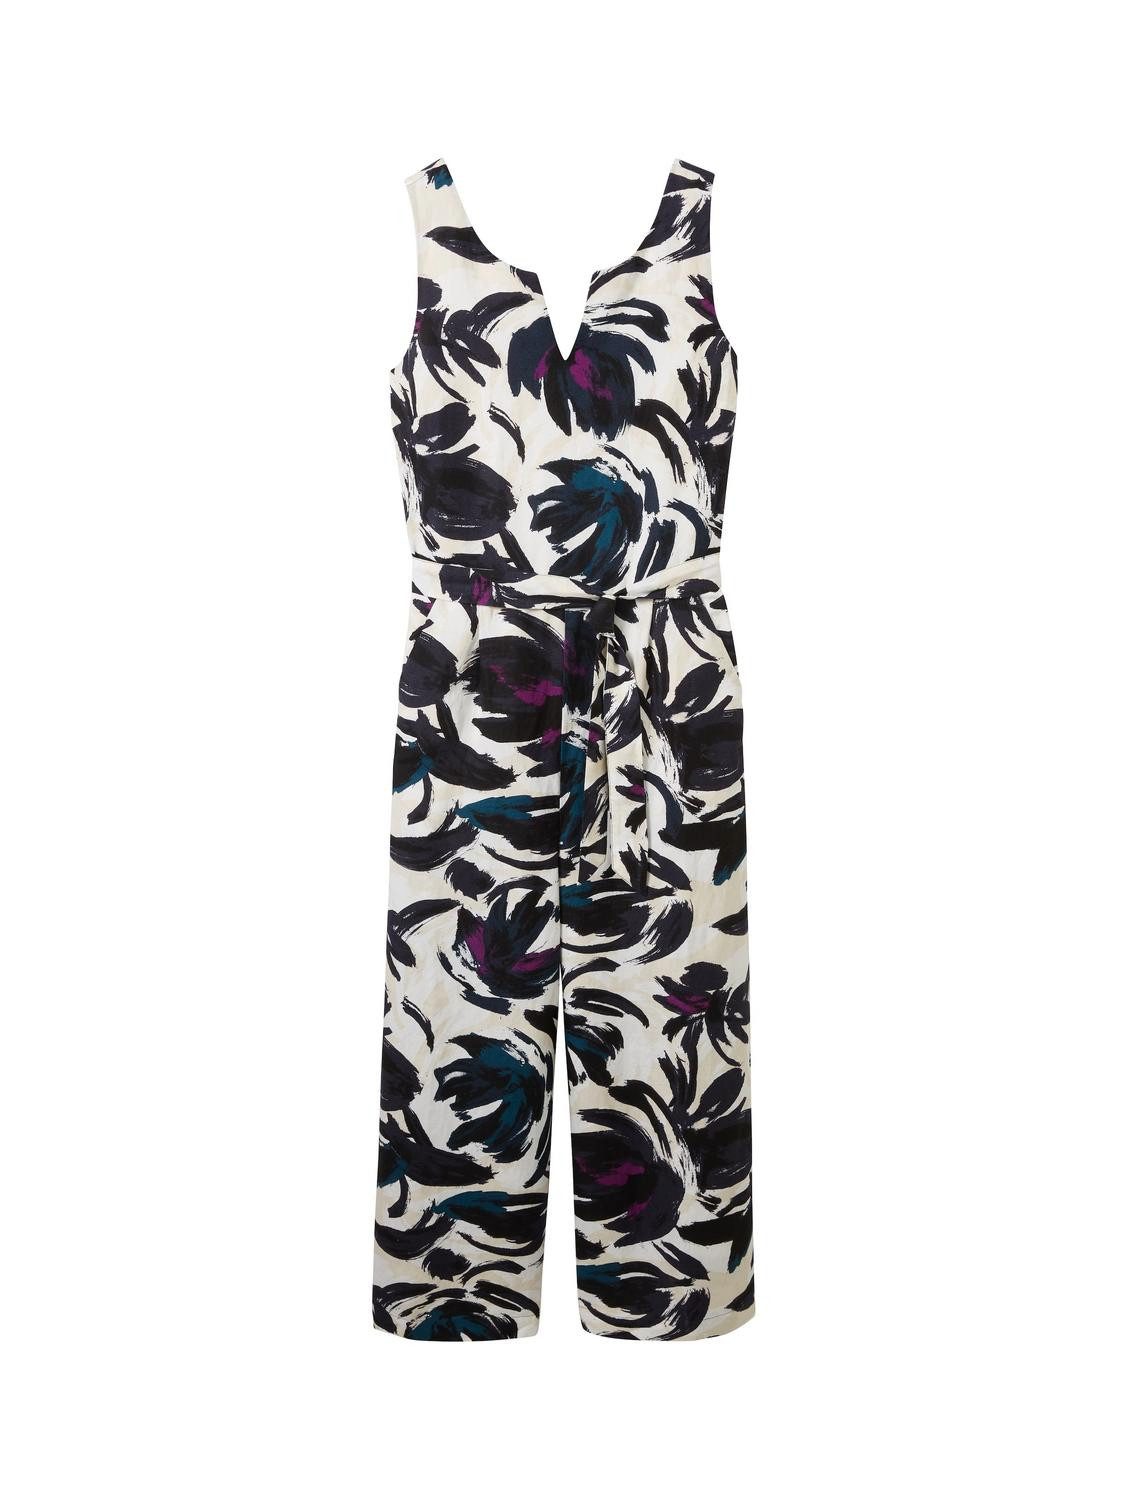 TOM TAILOR Sommerkleid linen overall with slit detail, dark blue floral design